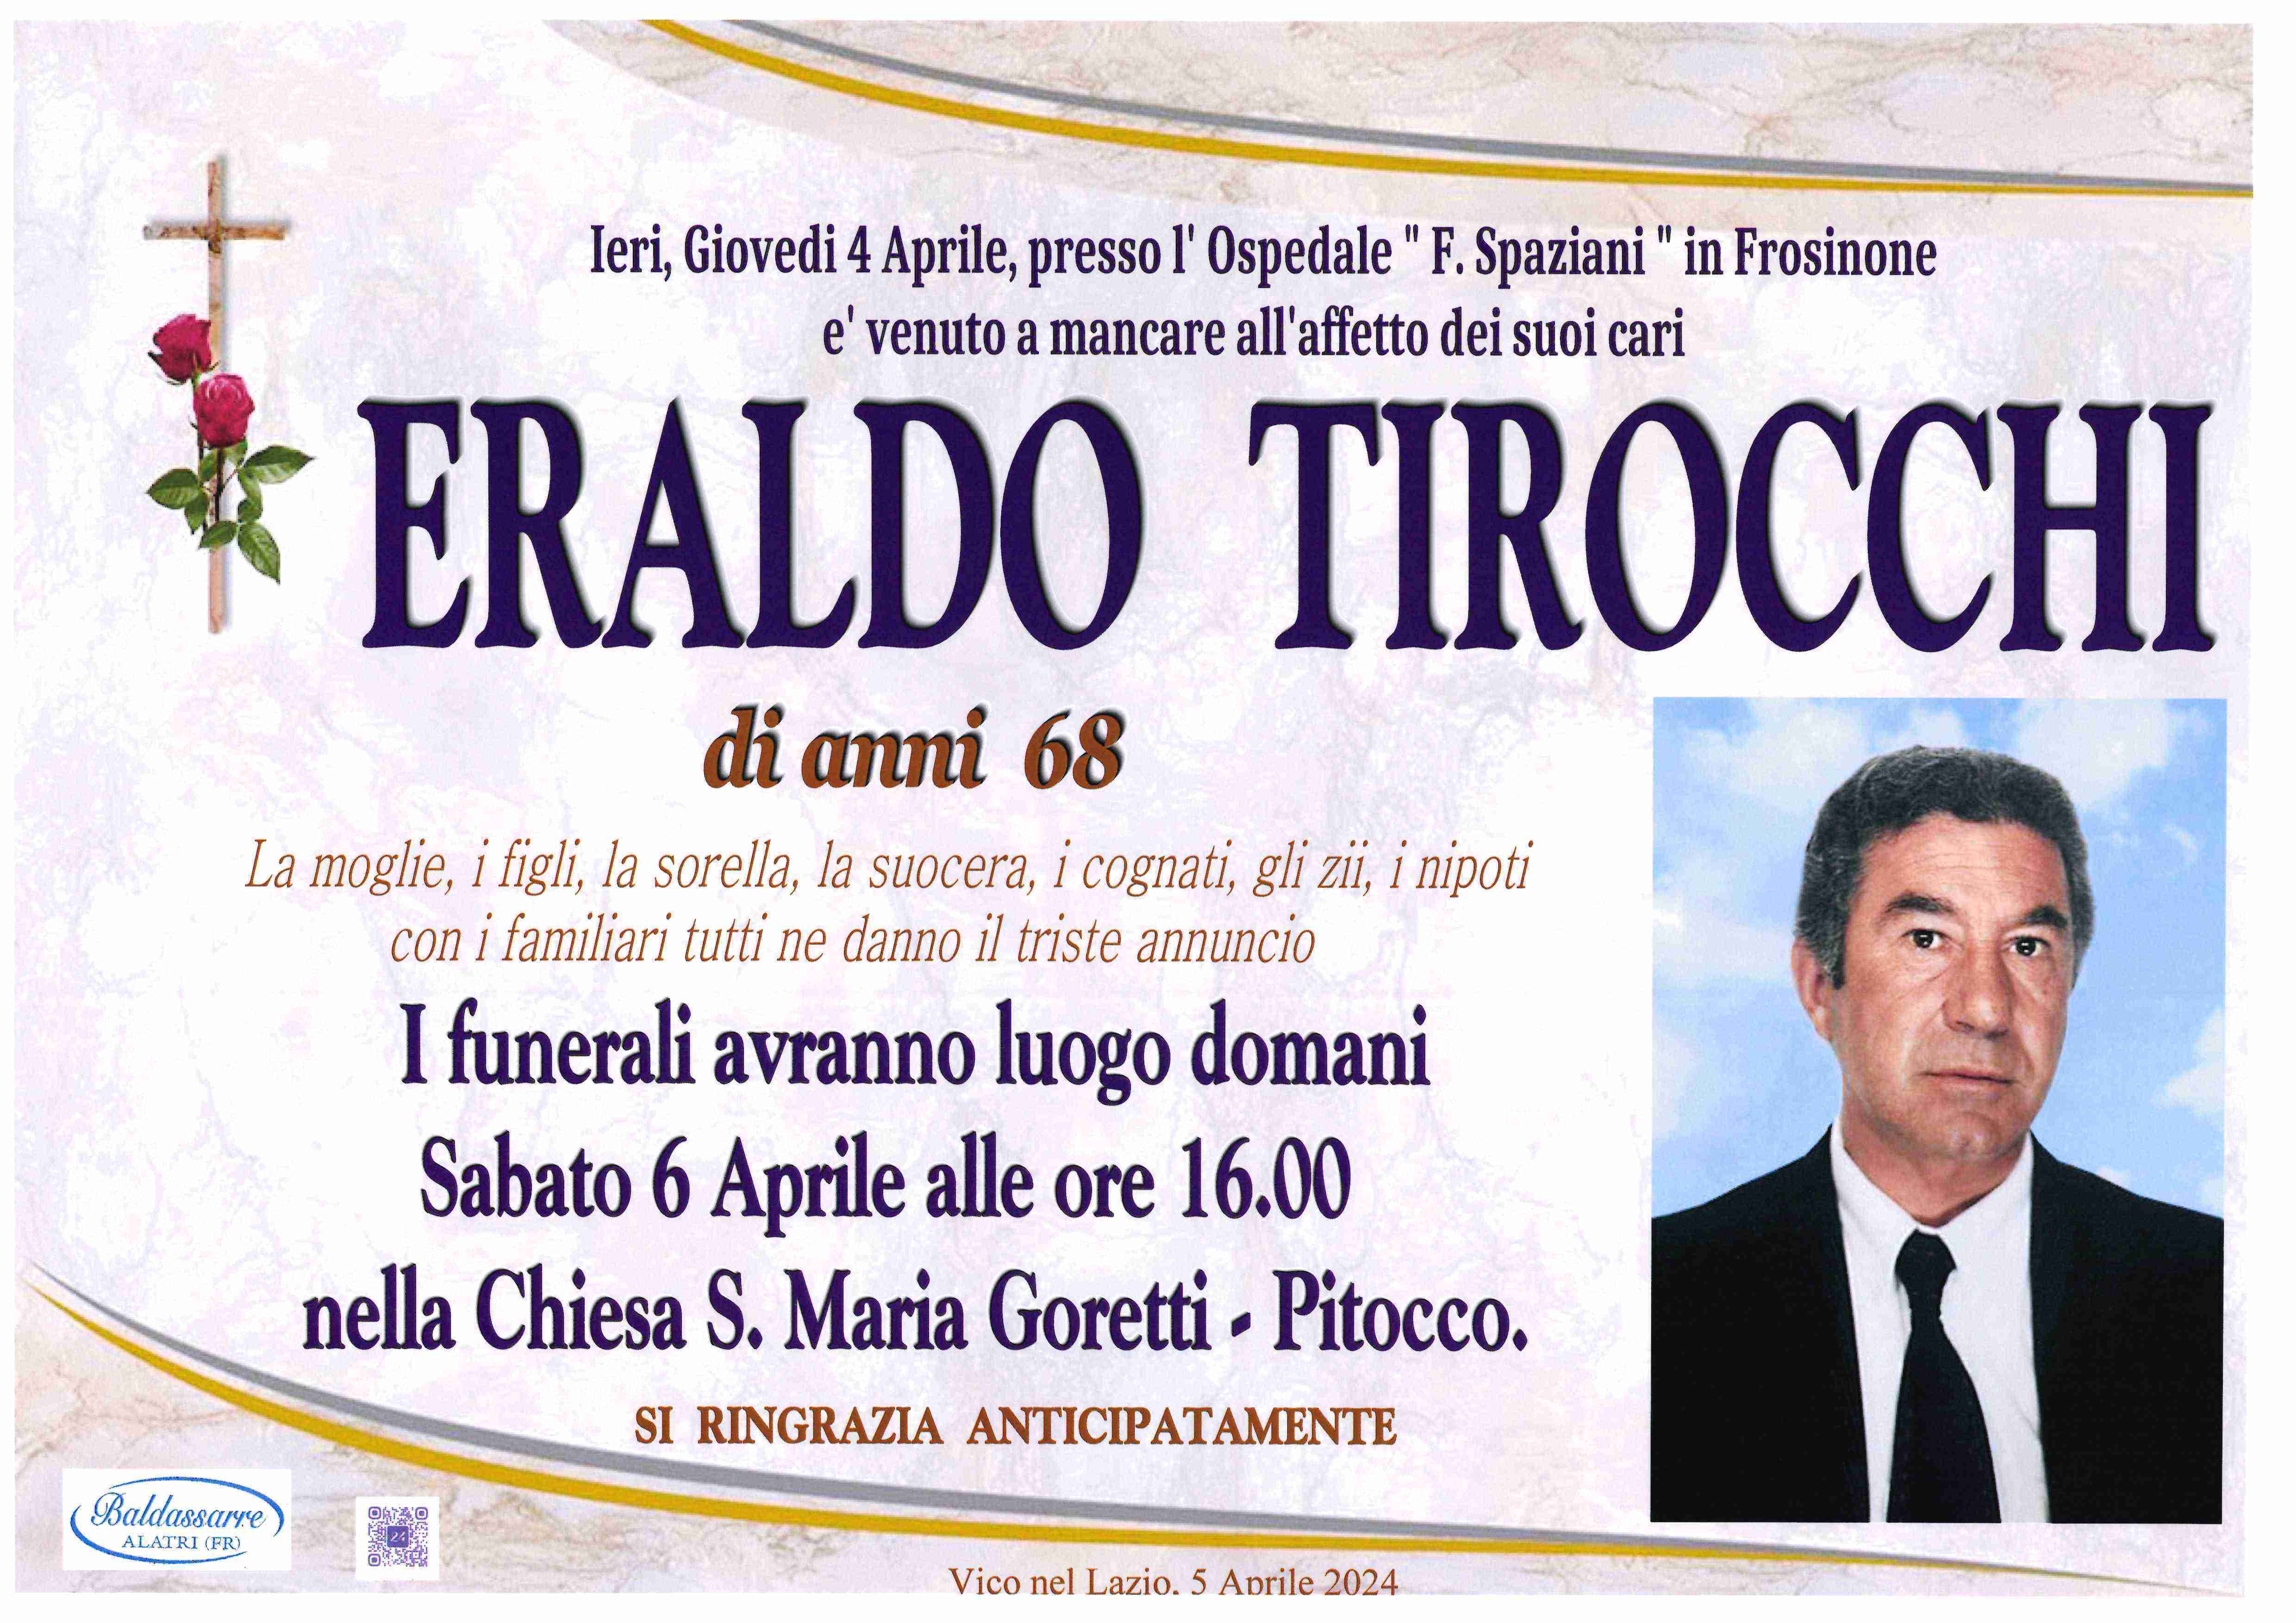 Eraldo Tirocchi